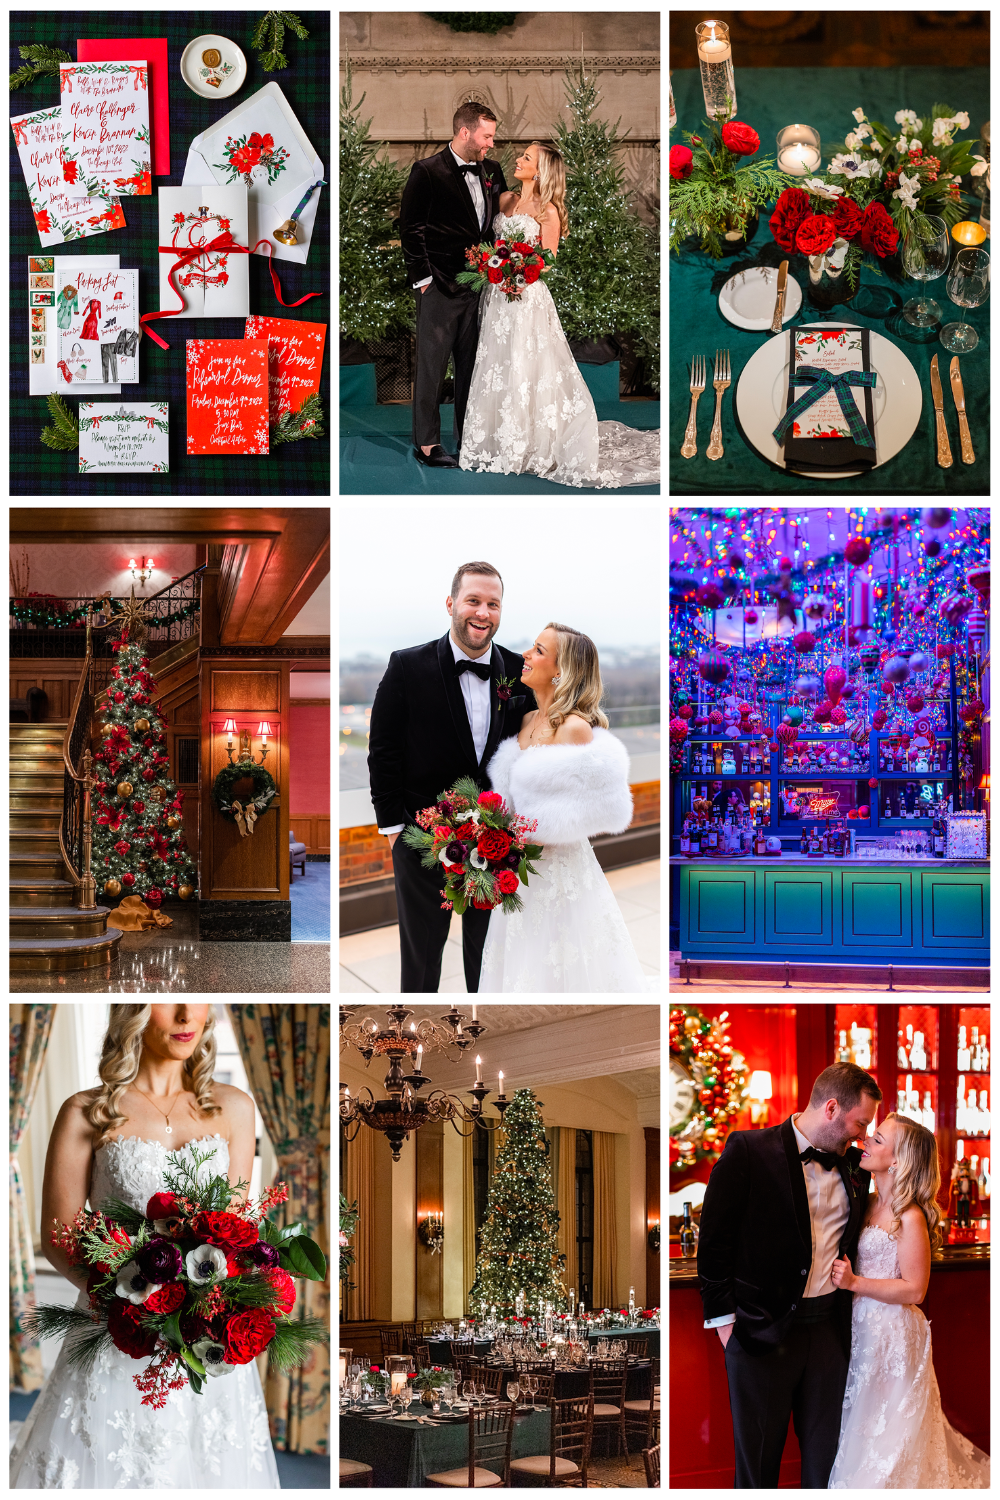 The Chicago Club Winter Wedding at Christmas photographed by Chicago Destination Wedding Photographer Alex Ferreri